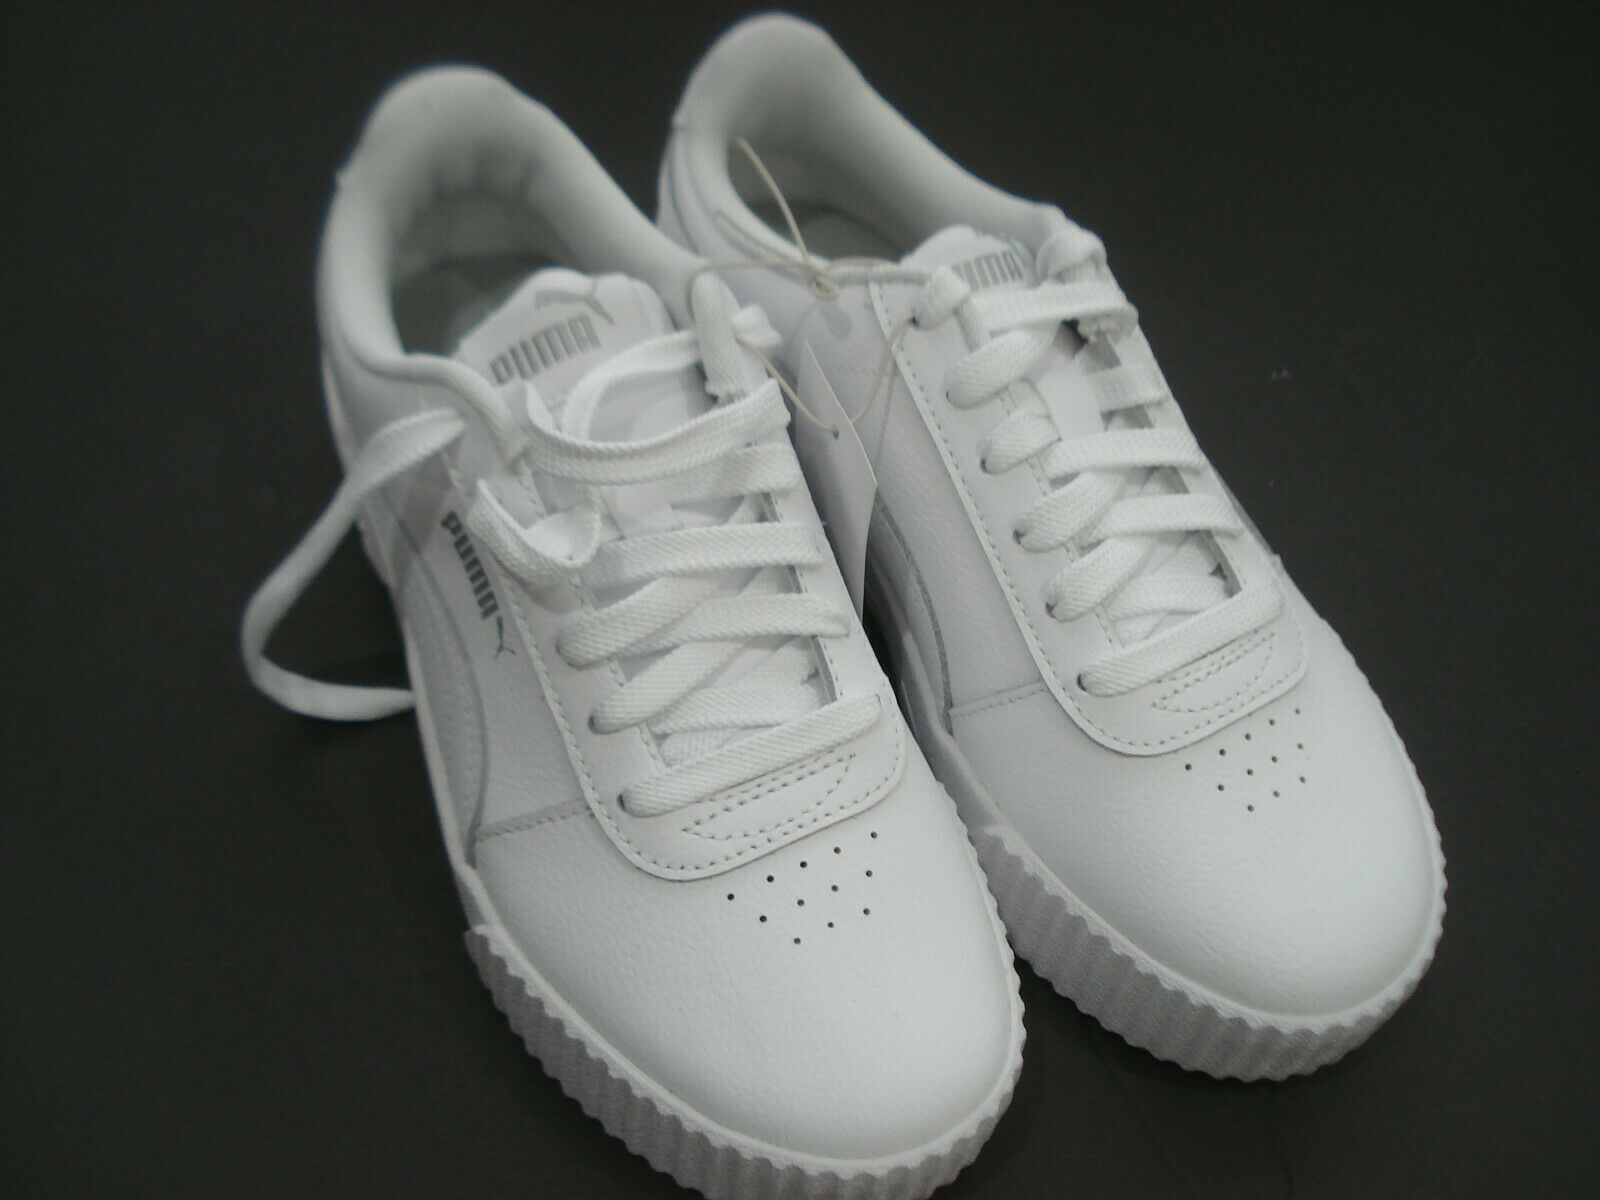 Puma Women's Carina Sneaker Leather Walking Shoes White Lace Up Size 6.5 No Box